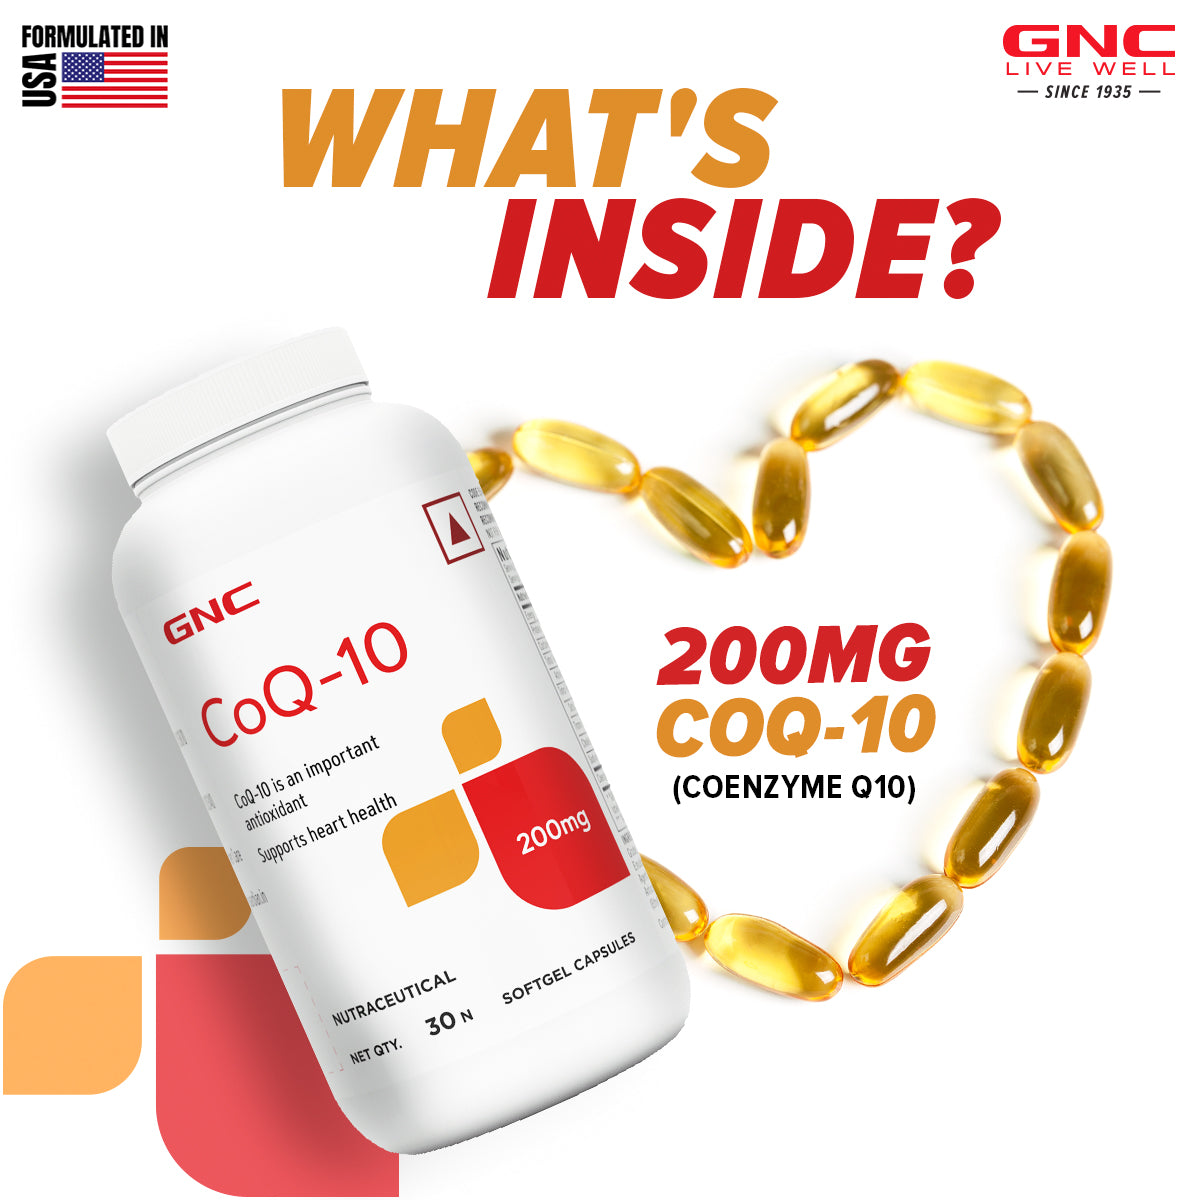 GNC CoQ-10 200mg - 30 Softgels - For Heart Health, Immunity, & Anti-Ageing